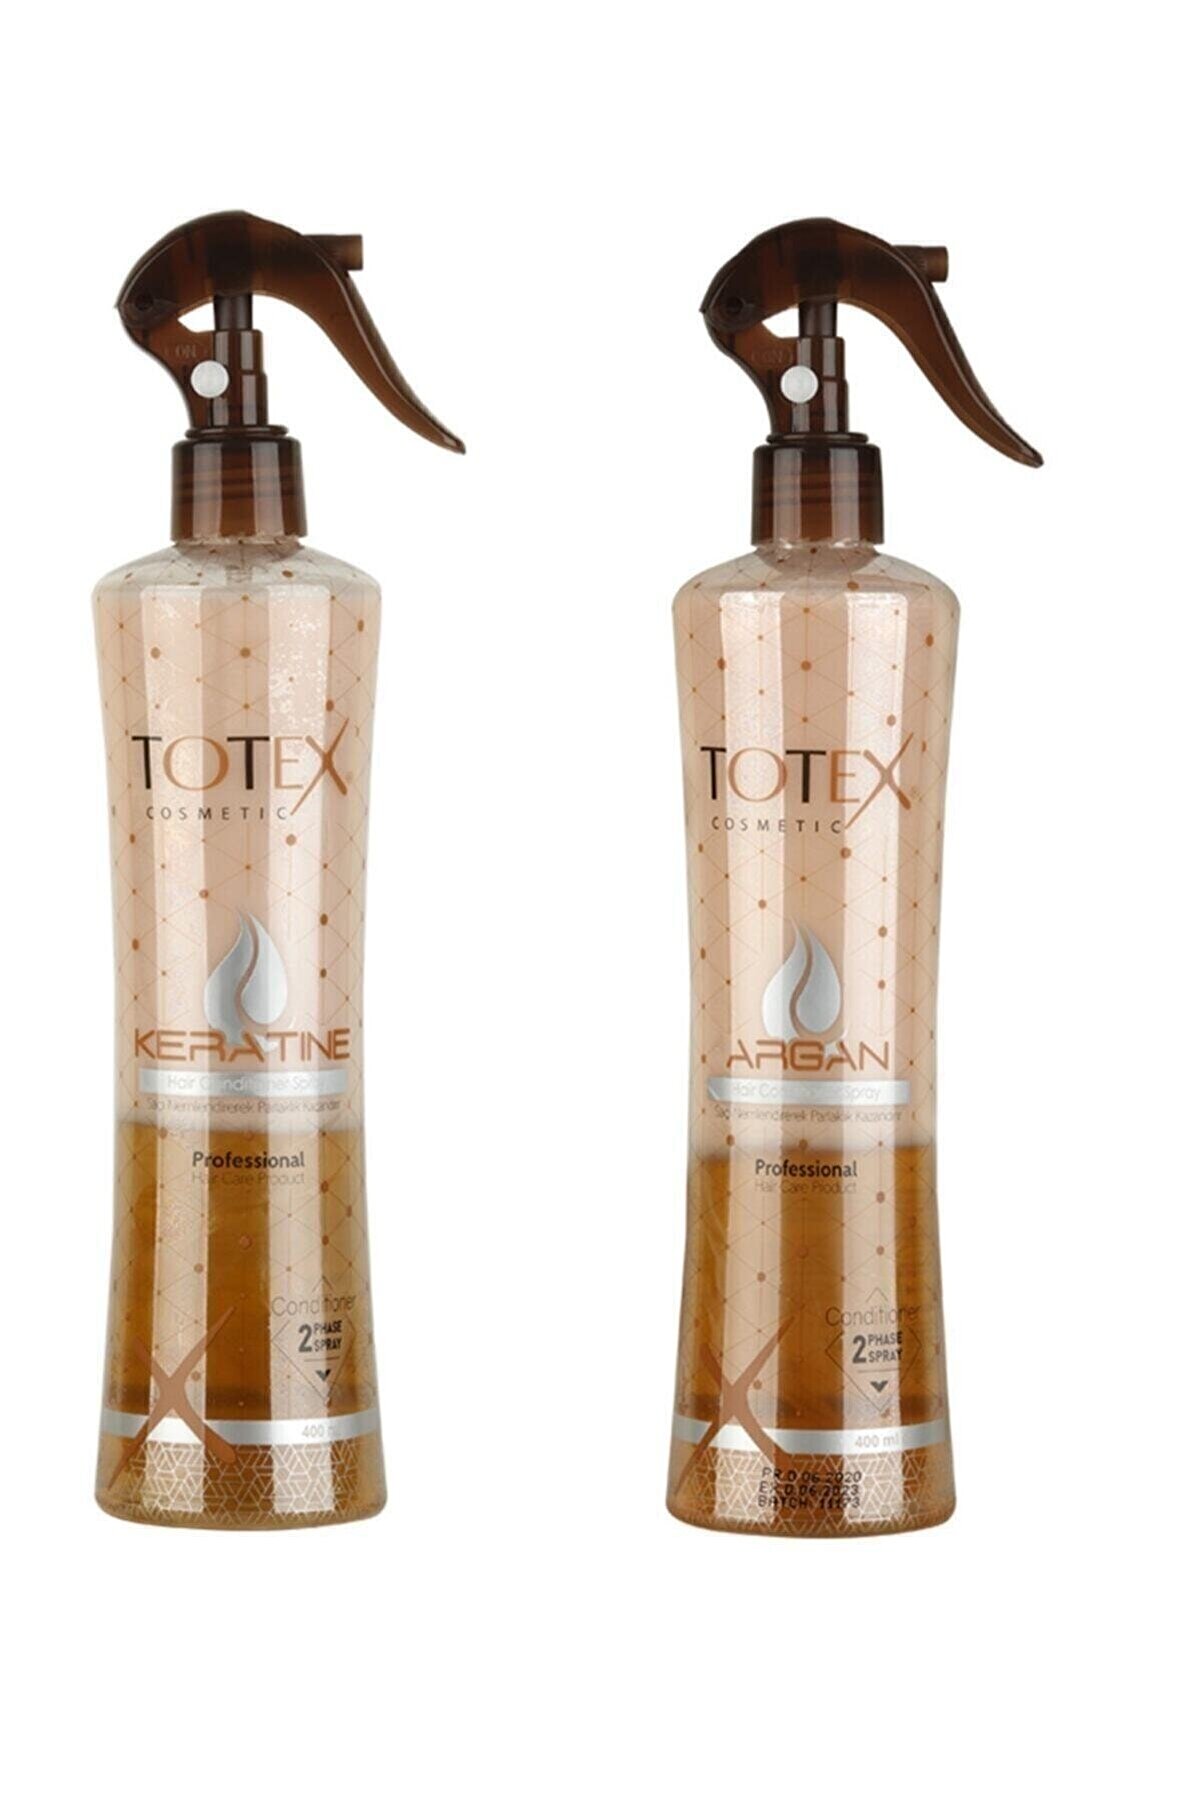 TOTEX Yıpranmış Boyalı Saçlar Keratin & Argan Saç Açıcı Sprey ( Fön Suyu ) 400 Ml Ikili Set